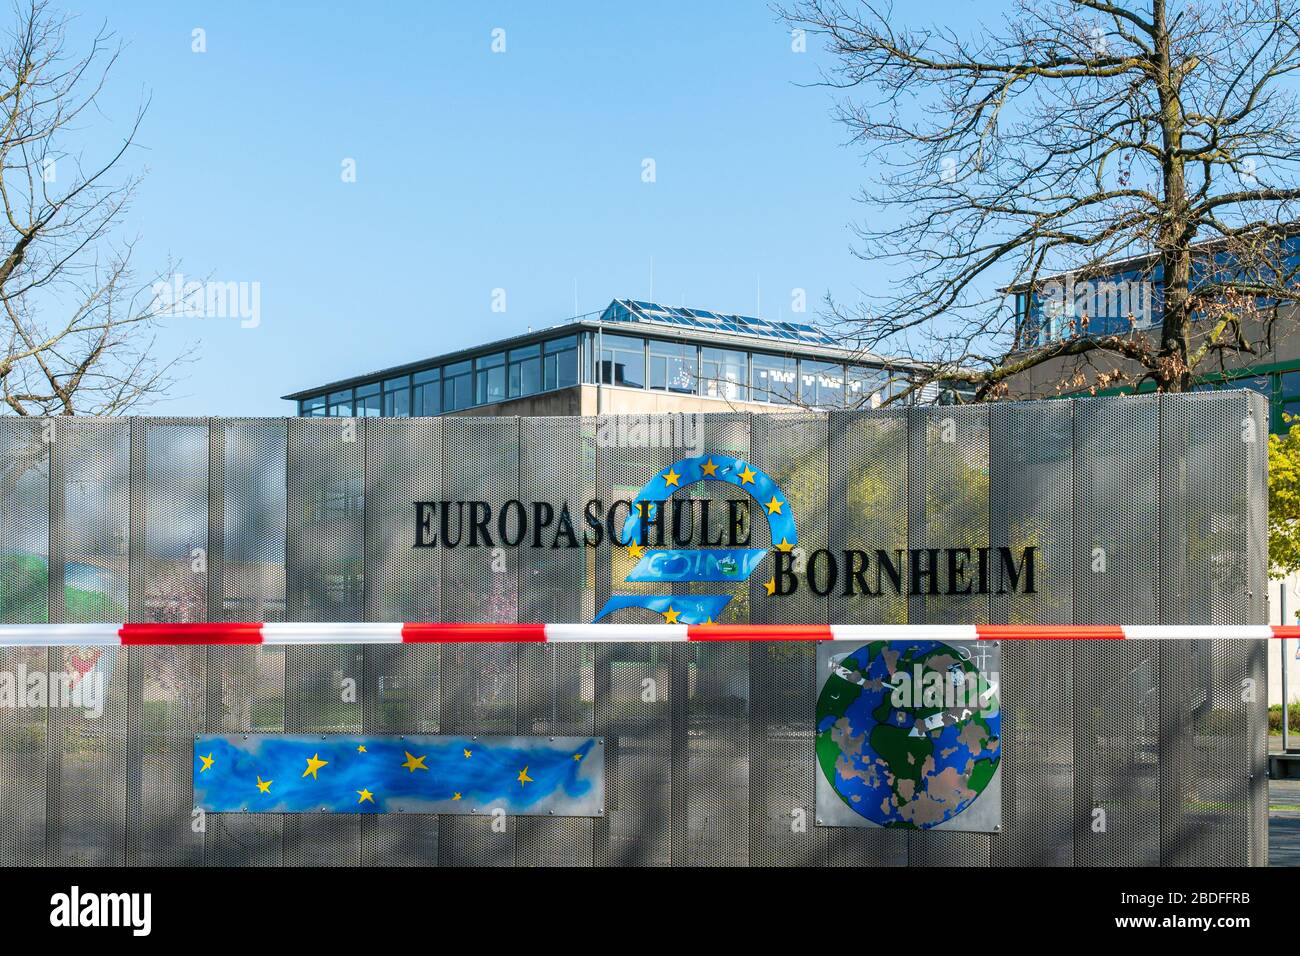 Bornheim, Nordrhein-Westfalen, Deutschland - 7. April 2020: Lokale Europäische Schule (Europachule) wegen globalen Corona-Virus, COVID-19-Pandemie geschlossen. Stockfoto